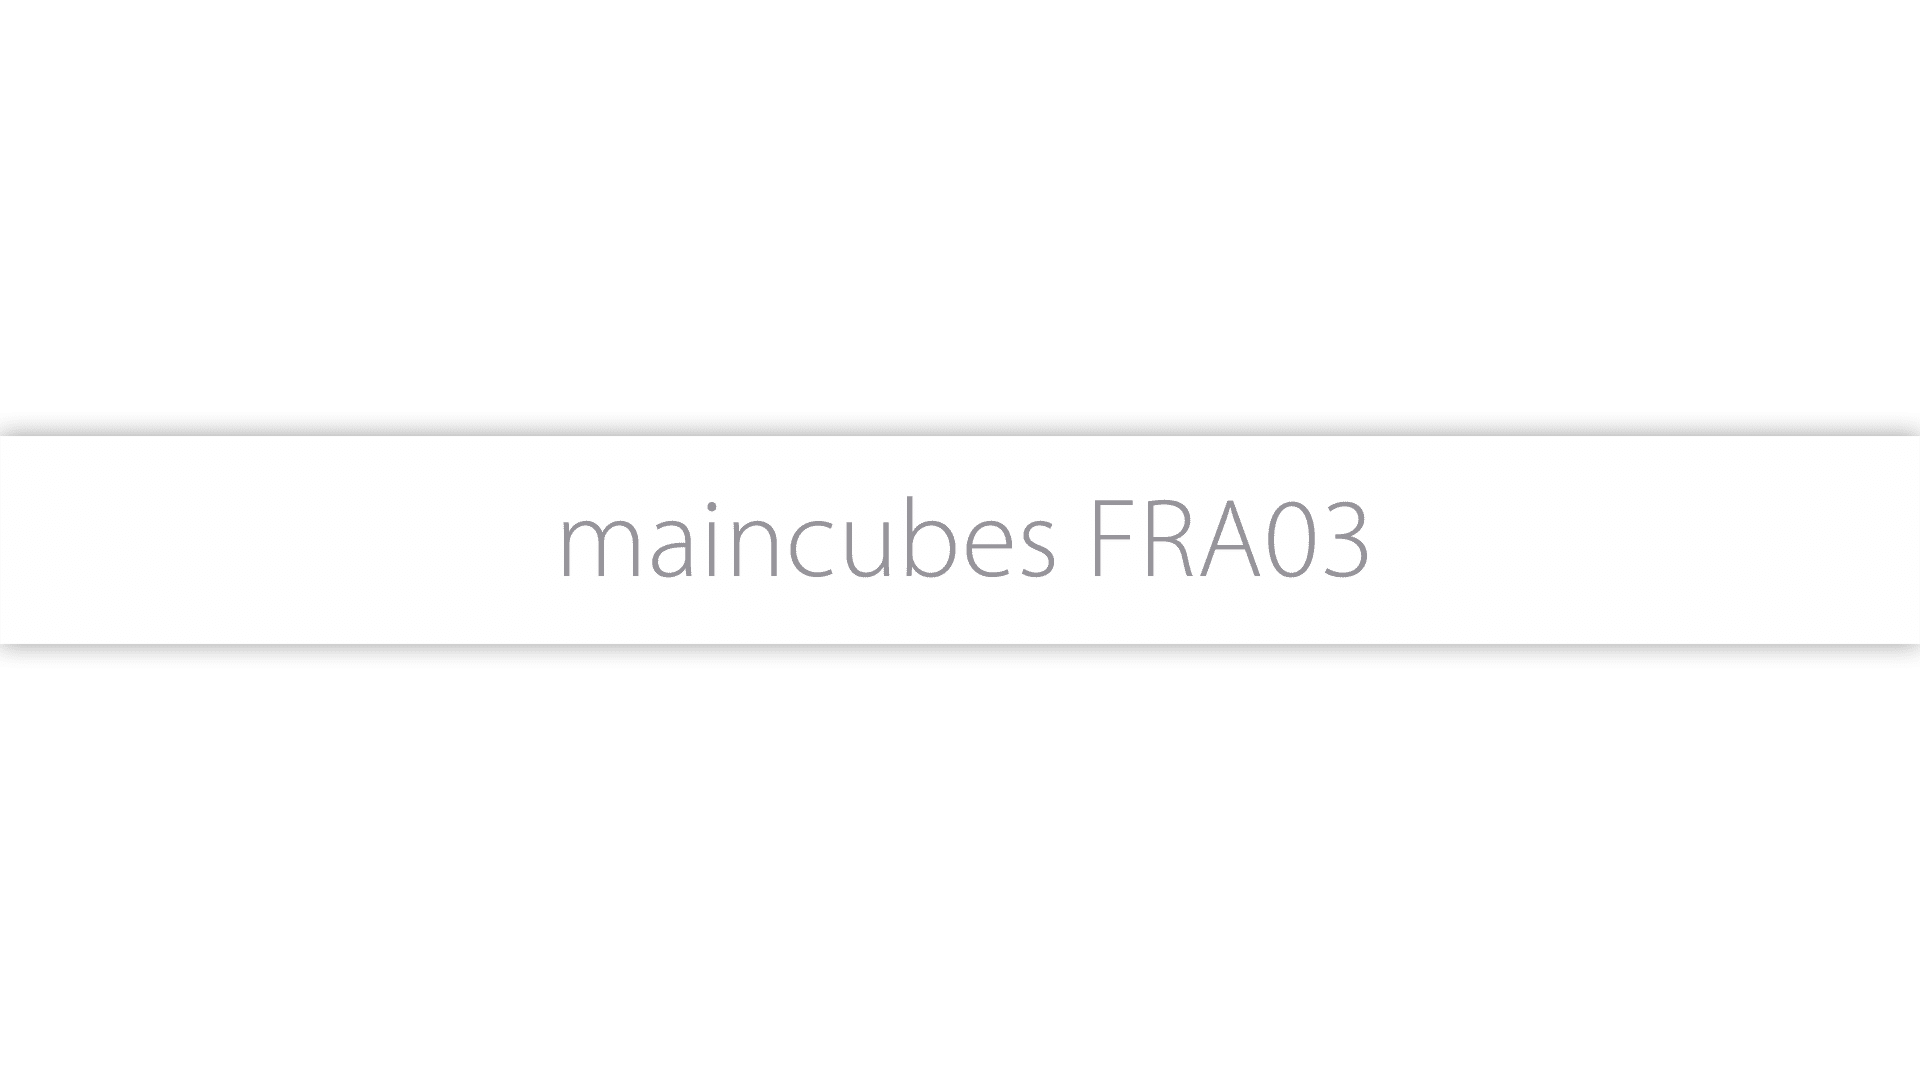 maincubes FRA03 Frankfurt